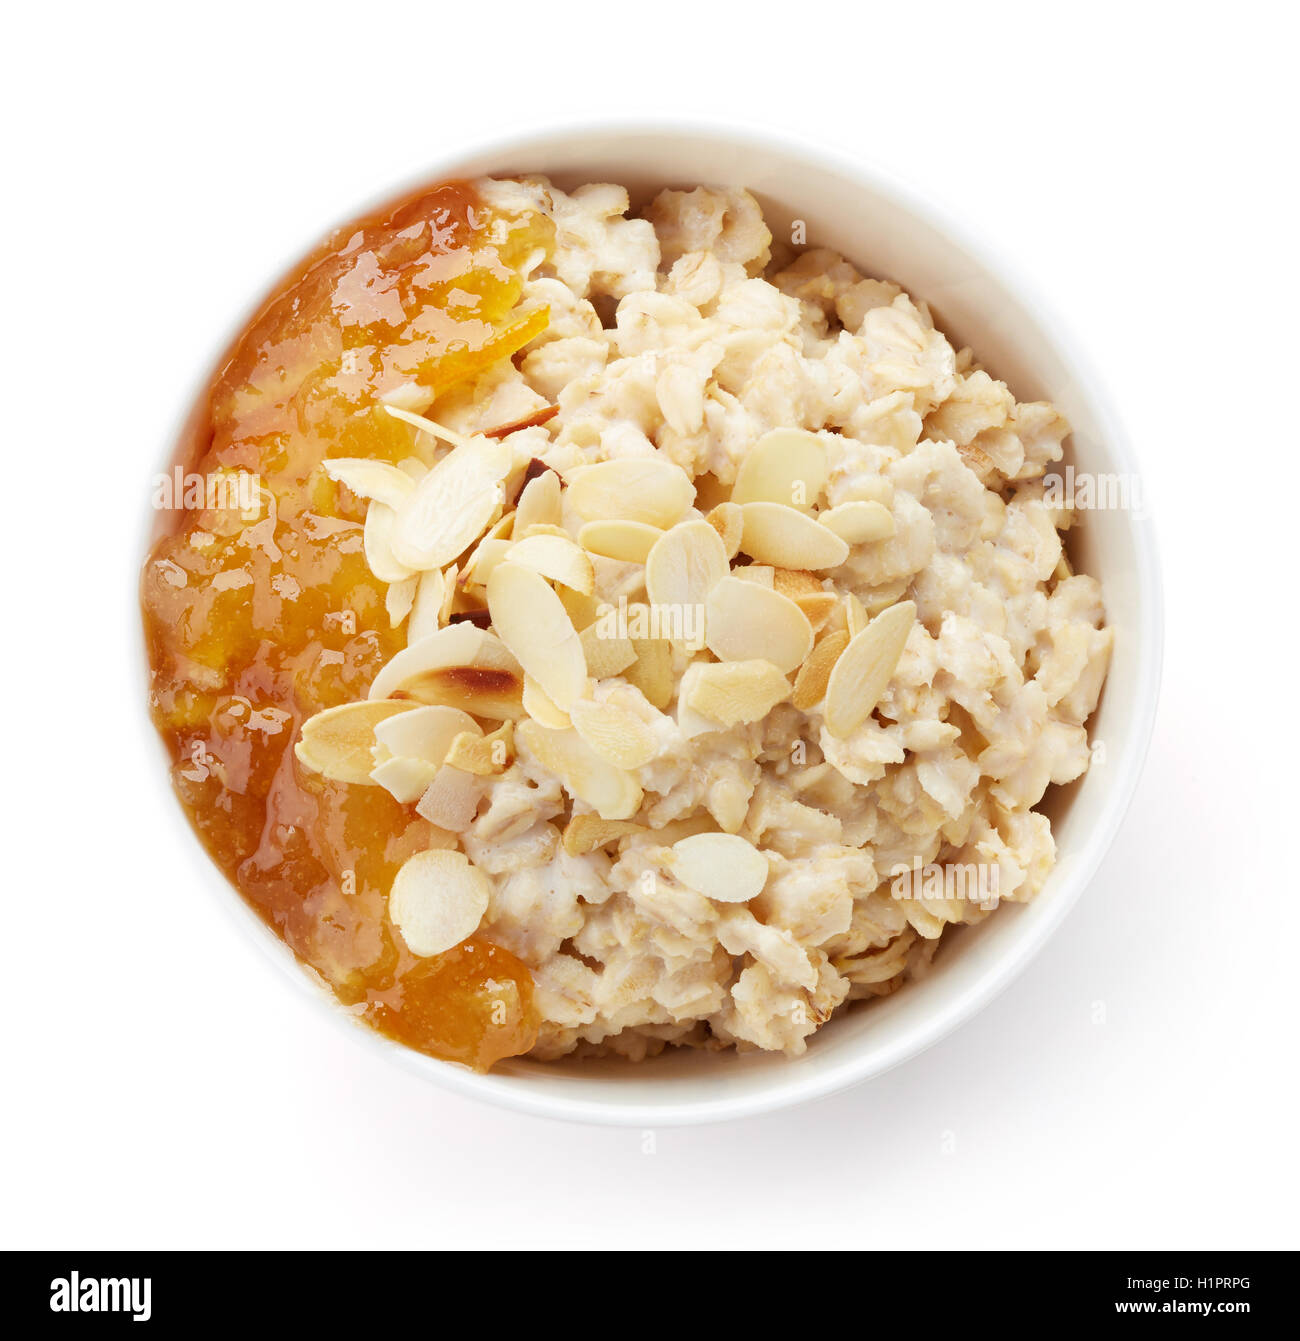 Bowl of healthy oatmeal with orange jam isolated on white background Stock Photo